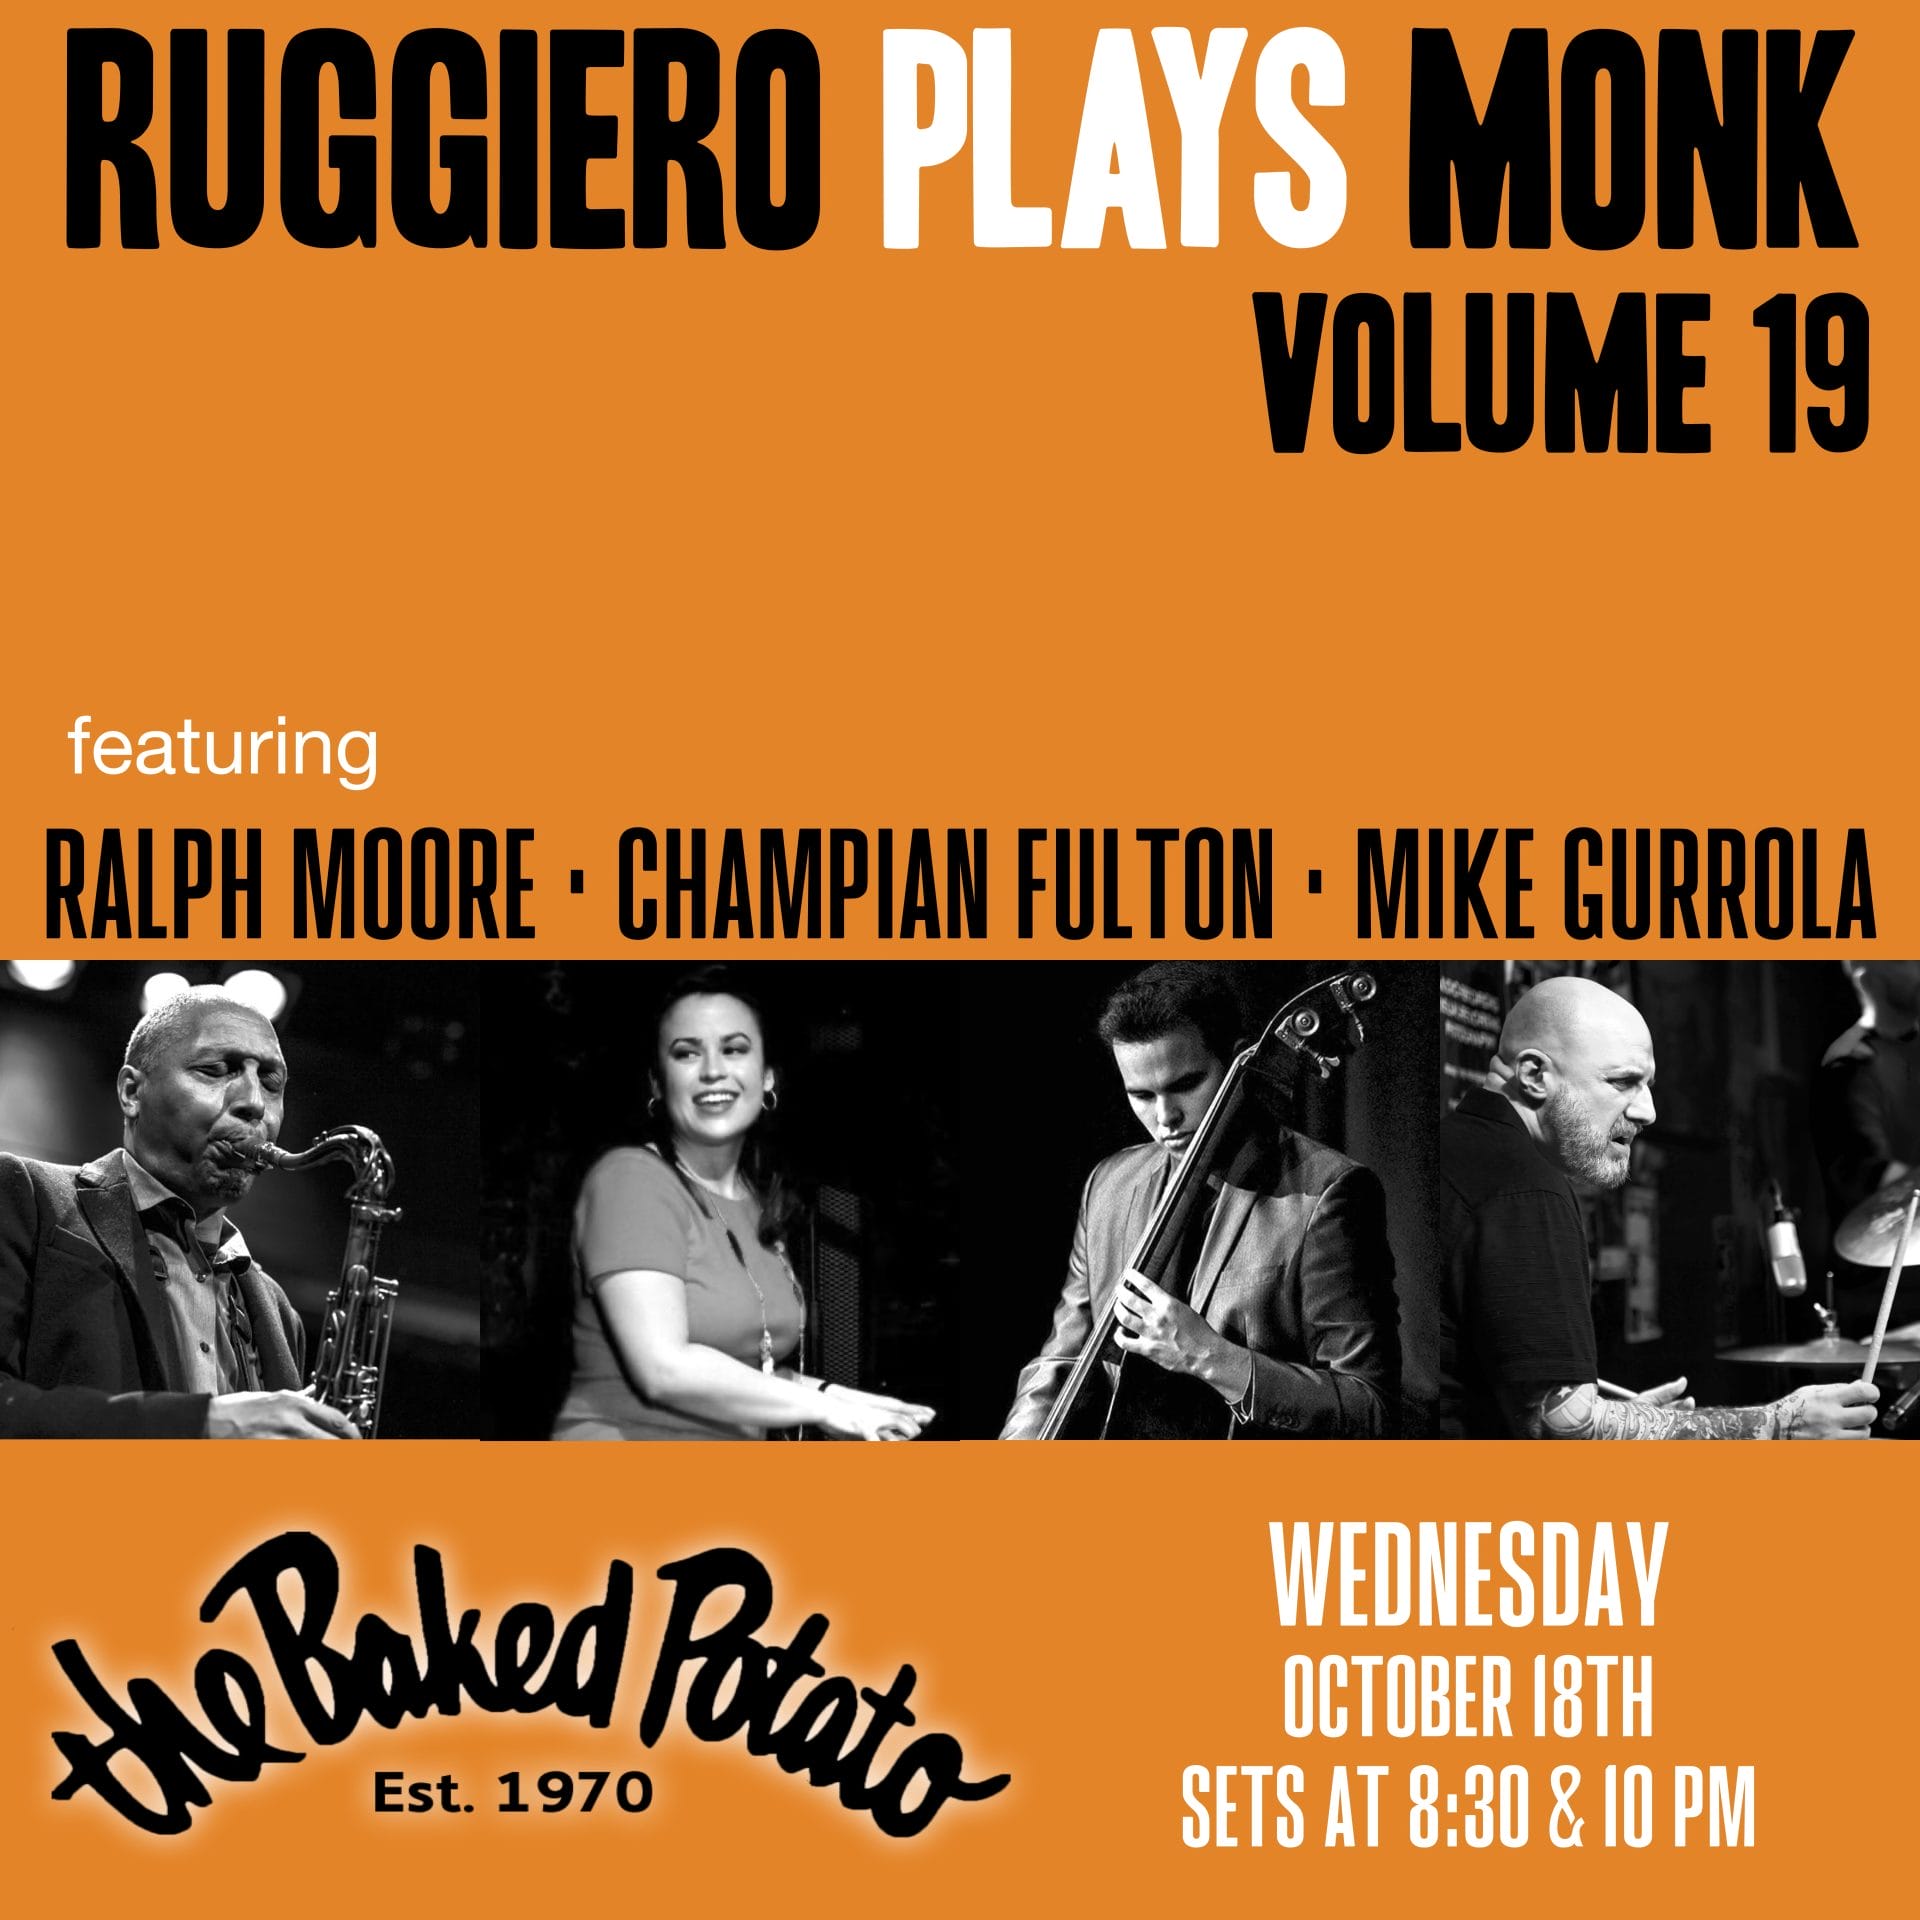 RUGGEIRO plays MONK - Wednesday, October 18, 2023